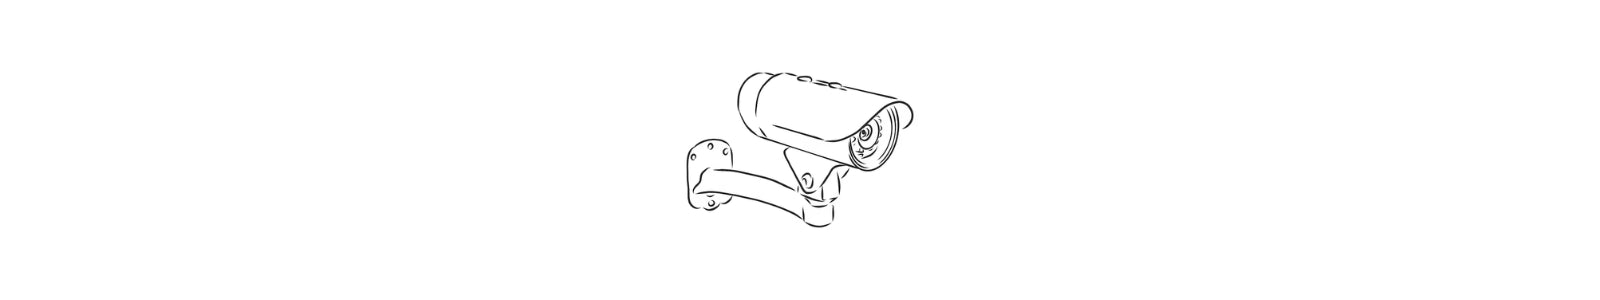 dessin de camera detecteur de mouvement